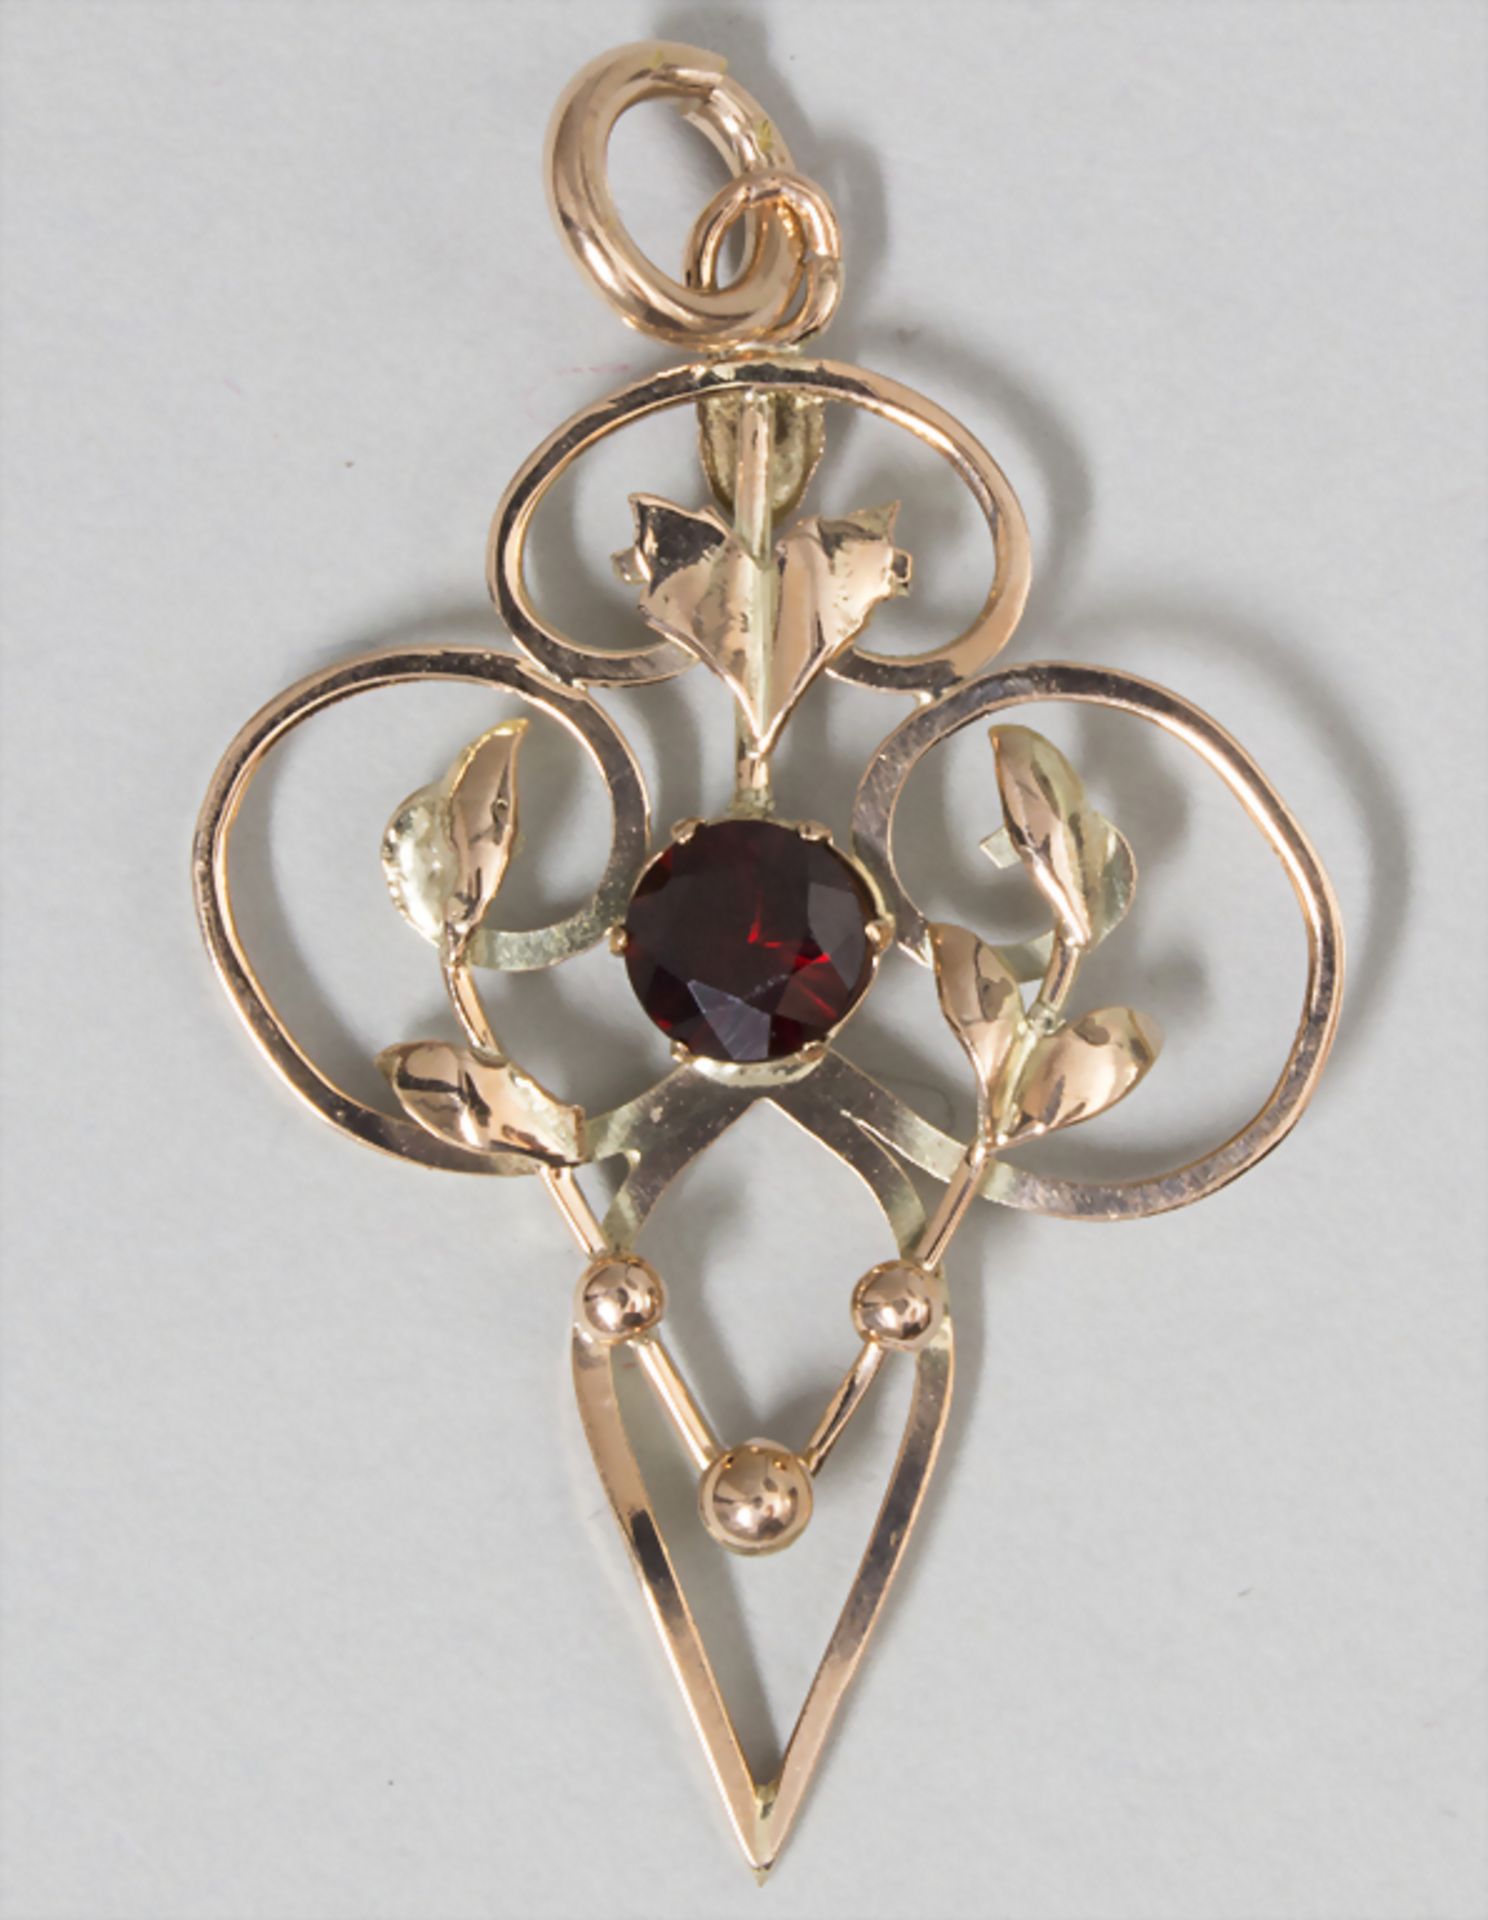 Jugendstil Anhänger / An Art Nouveau pendant, England, um 1900Material: Roségold, Gr